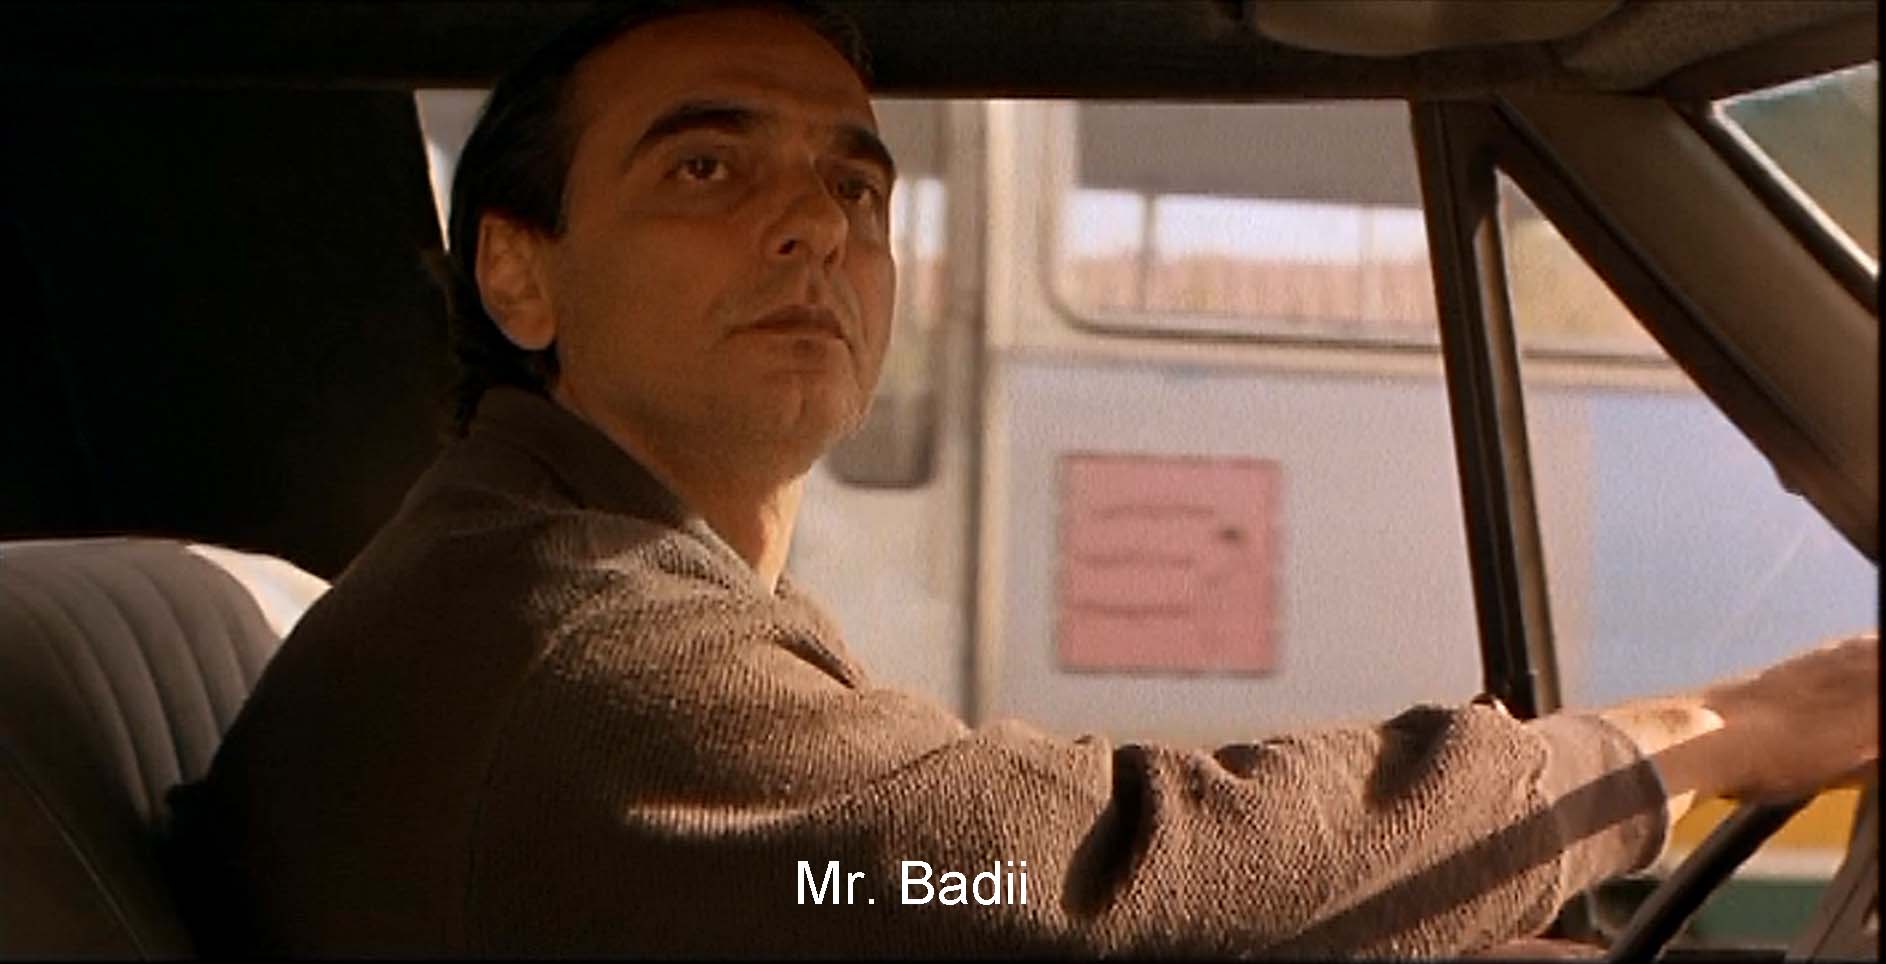 Mr. Badii